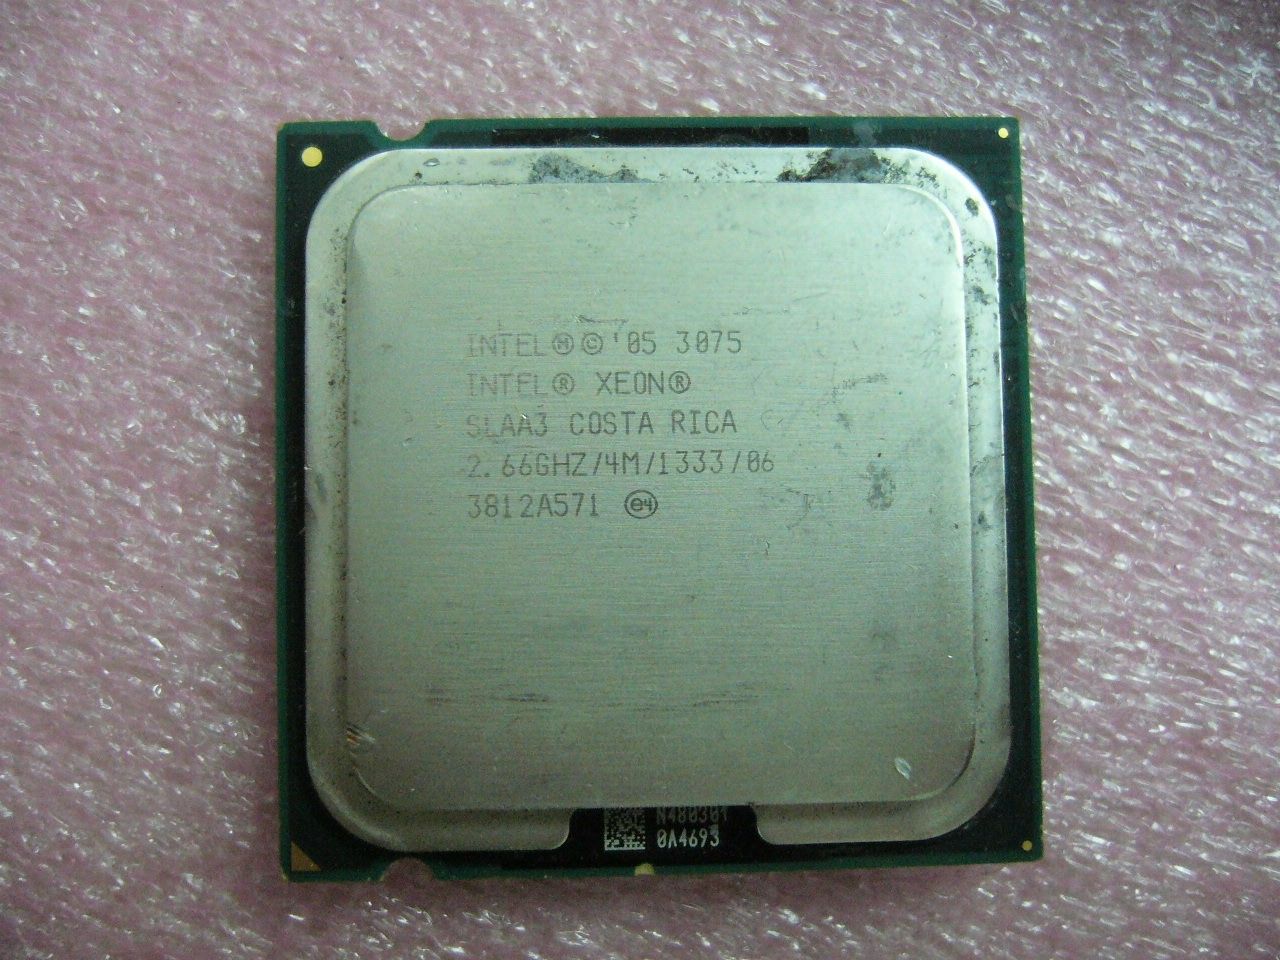 INTEL Dual Cores Xeon 3075 CPU 2.66GHz 4MB/1333Mhz LGA775 SLAA3